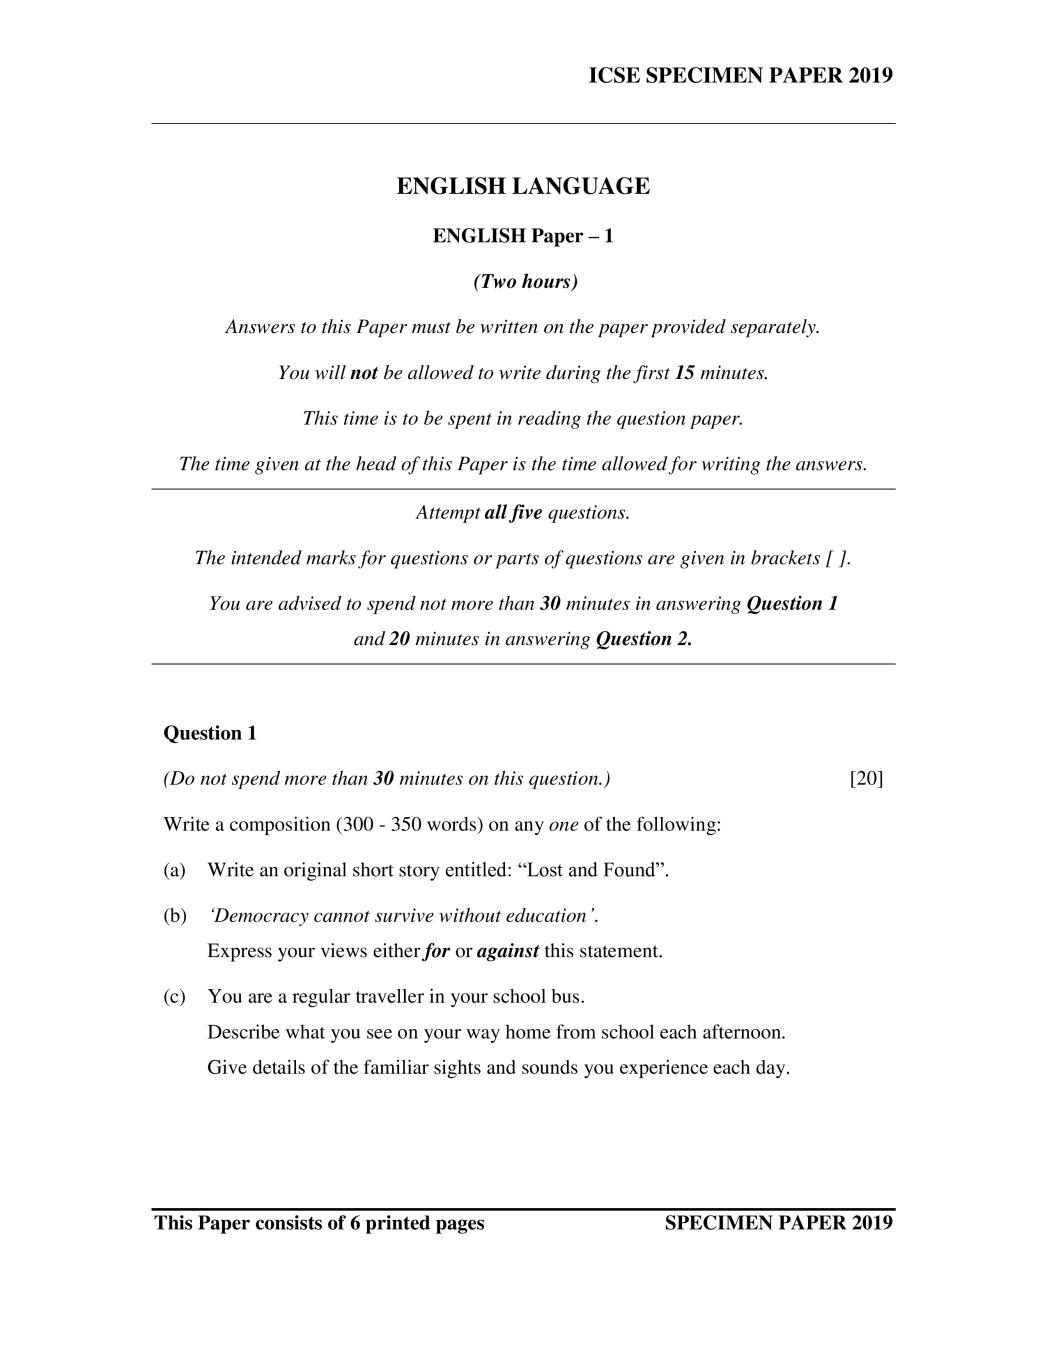 ICSE Class 10 Specimen Paper 2019 for English Language Paper 1 - Page 1